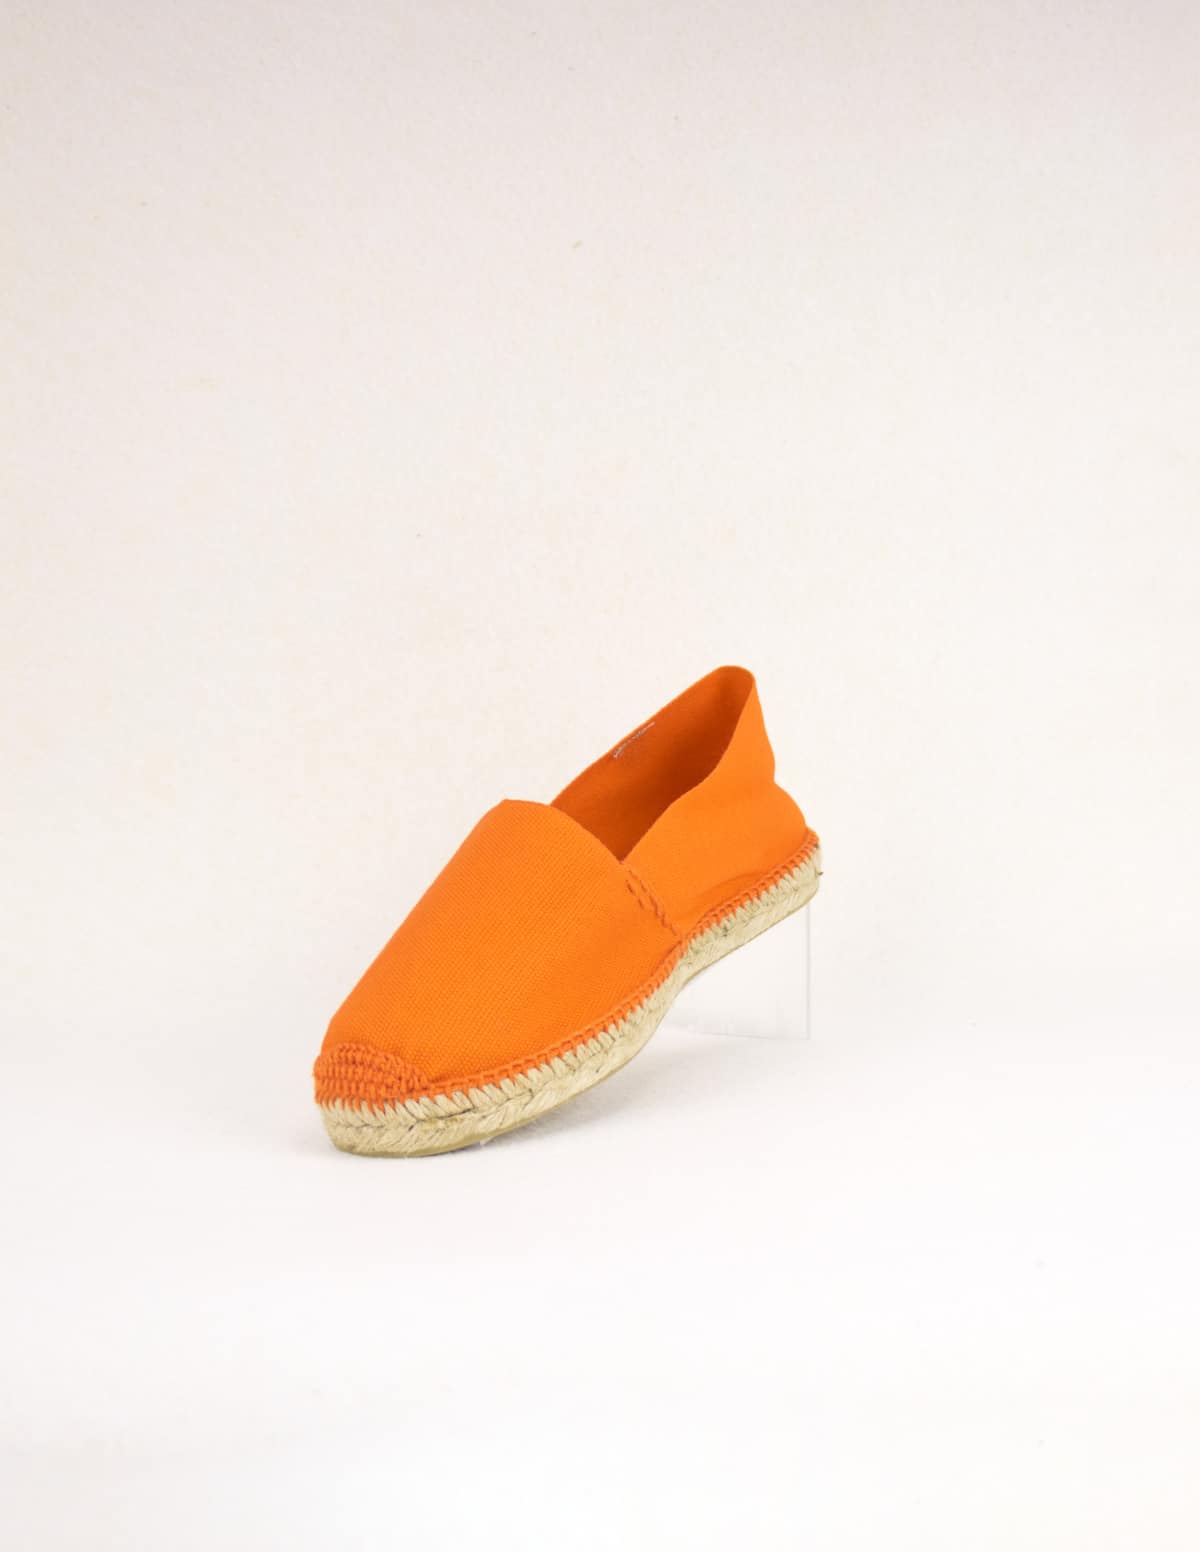 Chaussures Sandales Espadrilles SassyClassy Espadrille orange clair-blanc cass\u00e9 style d\u00e9contract\u00e9 